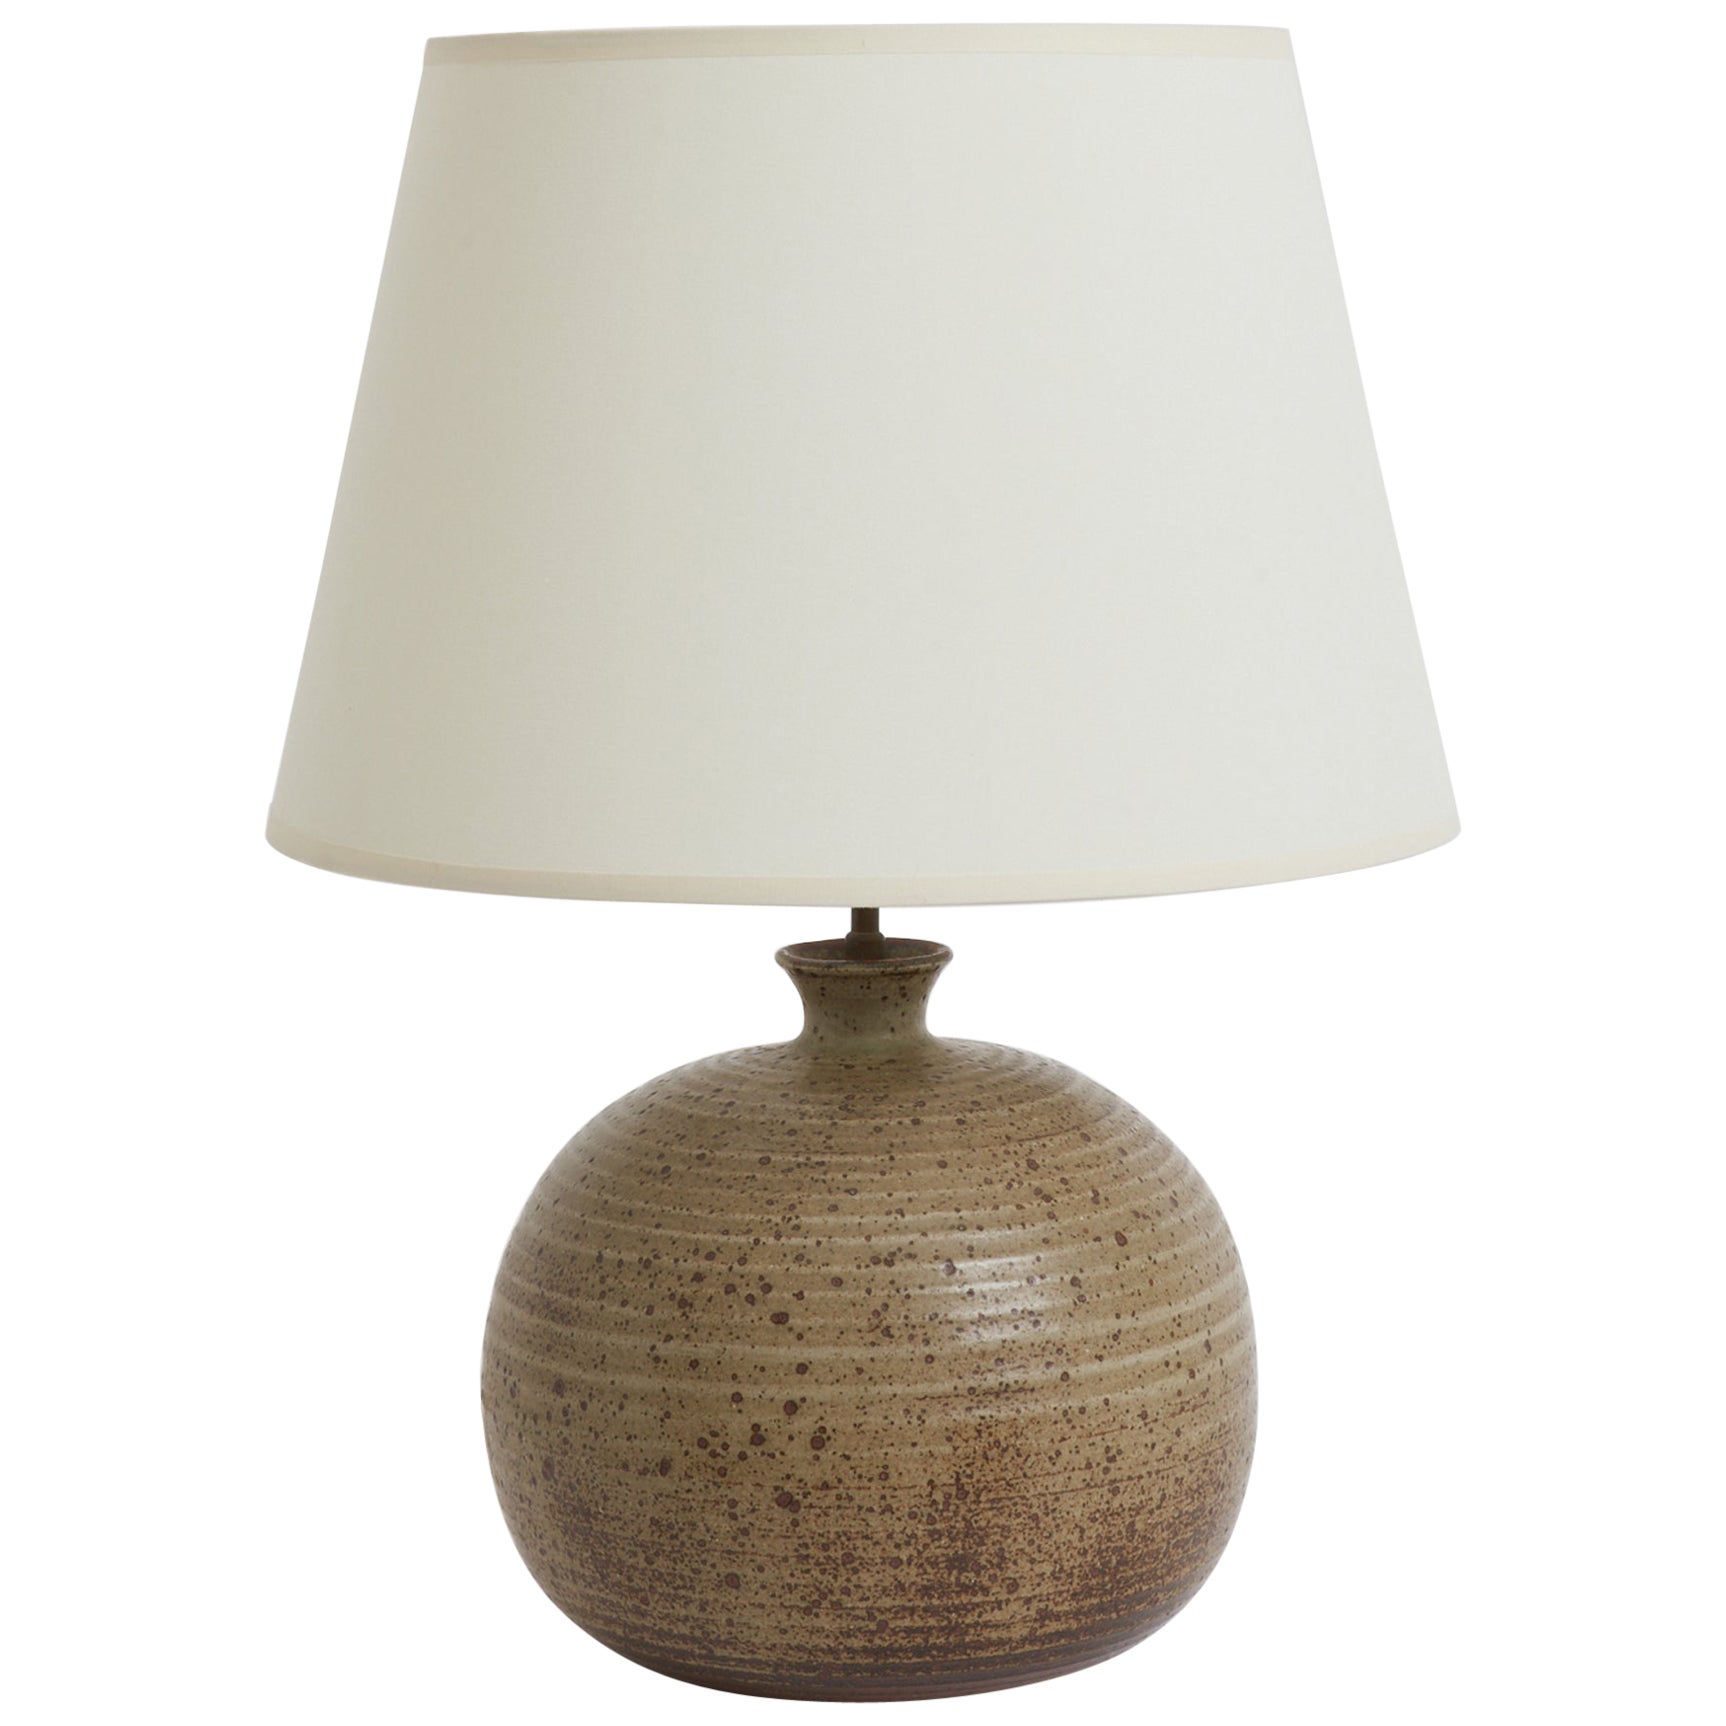 Midcentury Stoneware Table Lamp